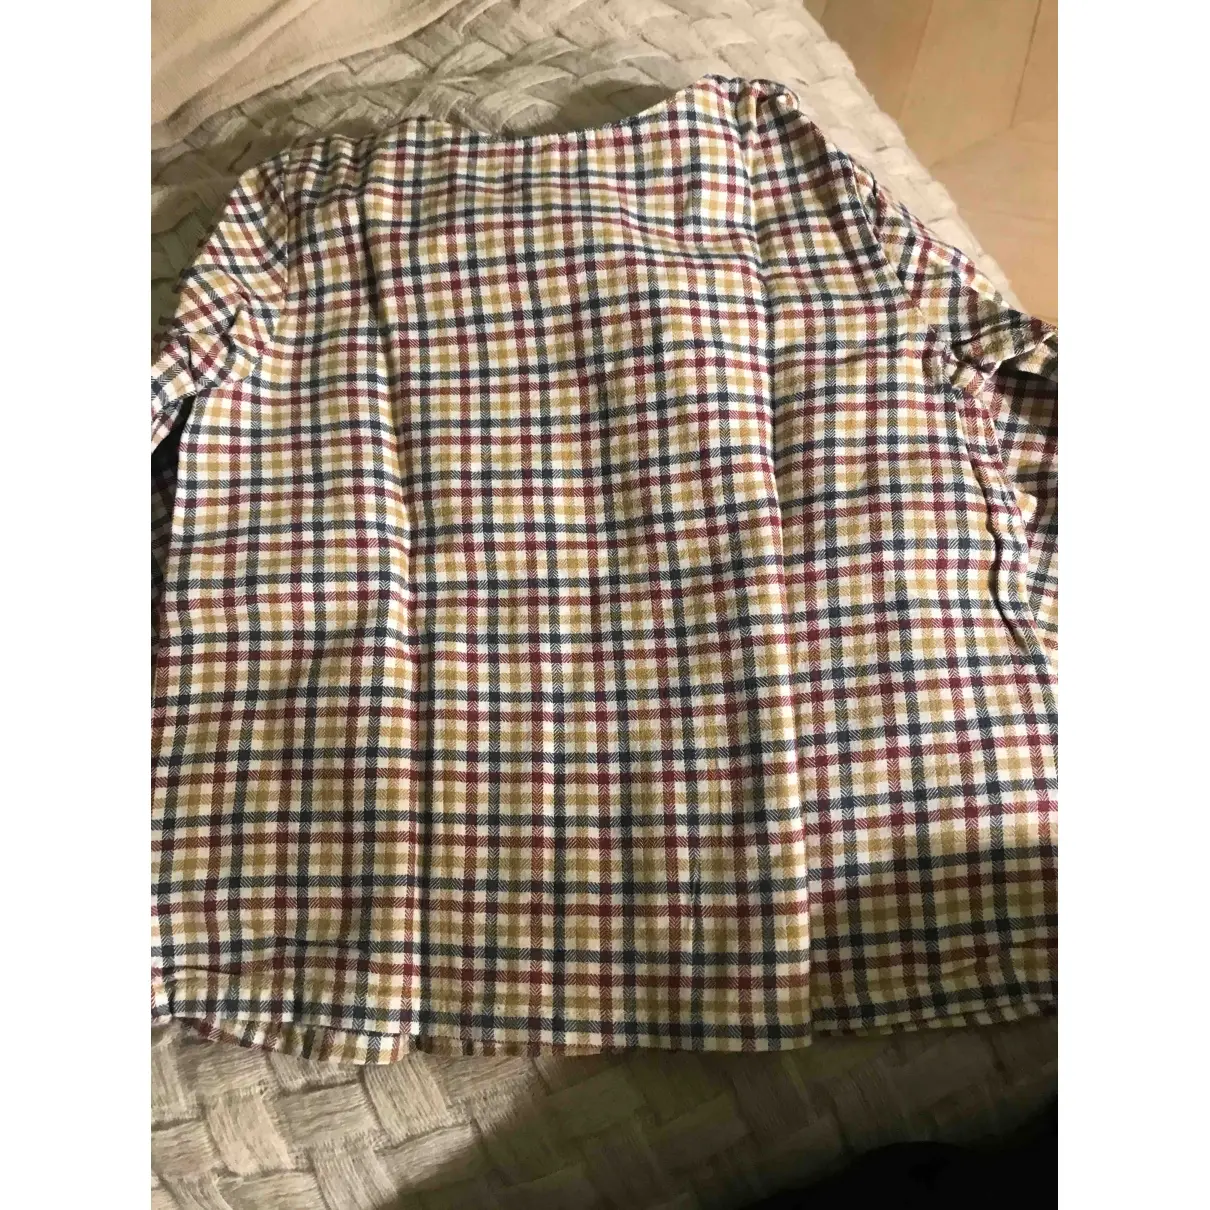 Bonton Shirt for sale